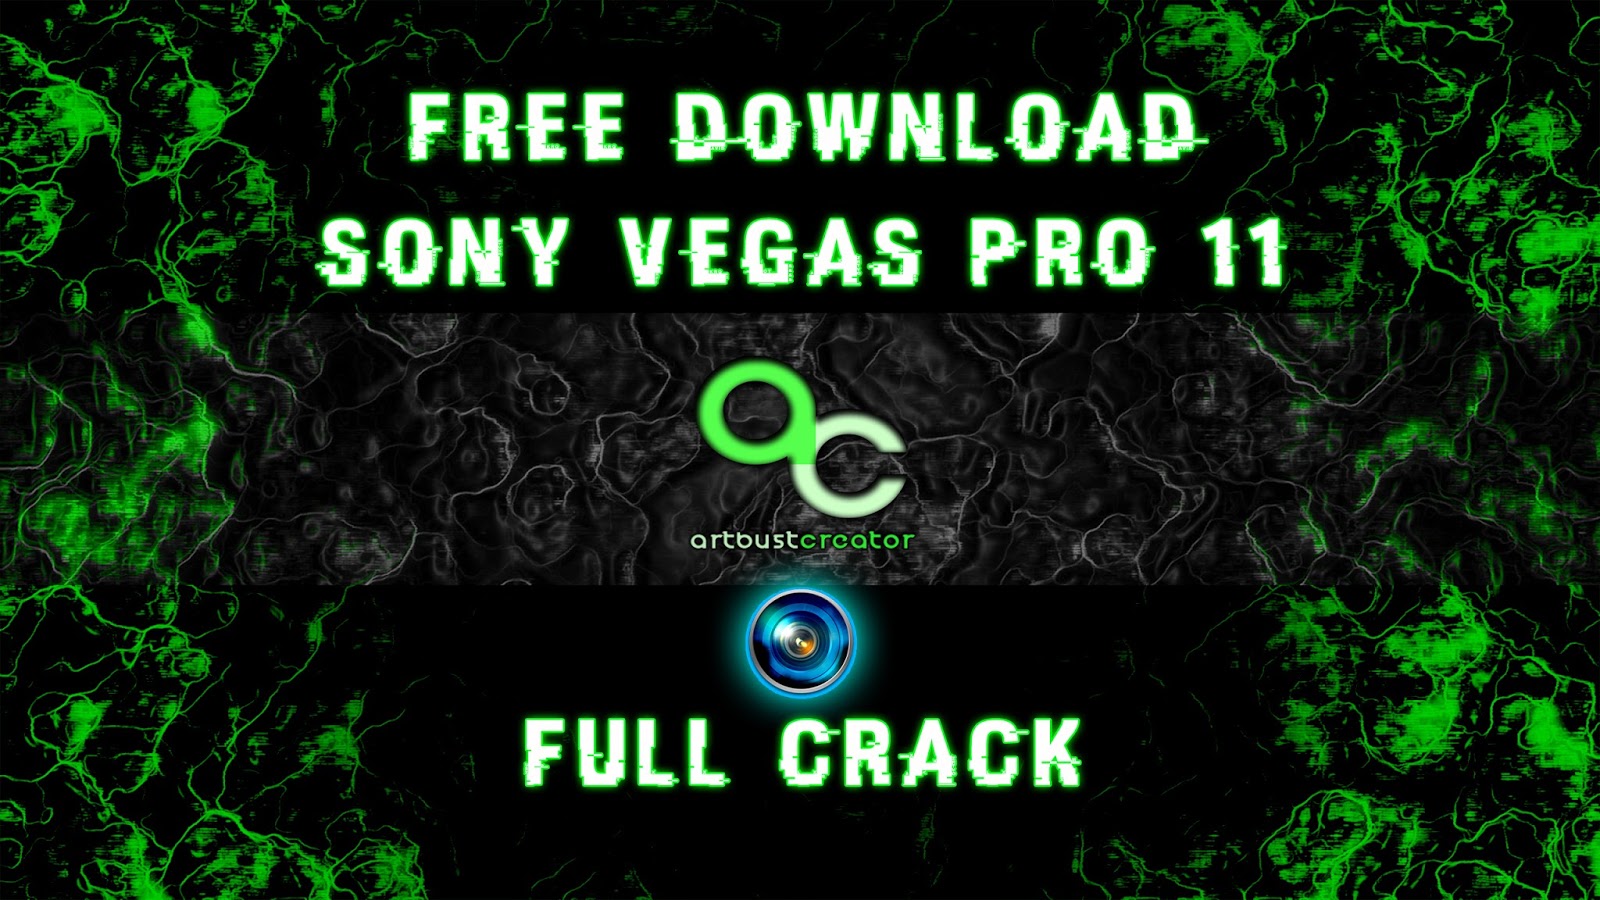 Sony Vegas Pro 11 Free Download 64 Bit